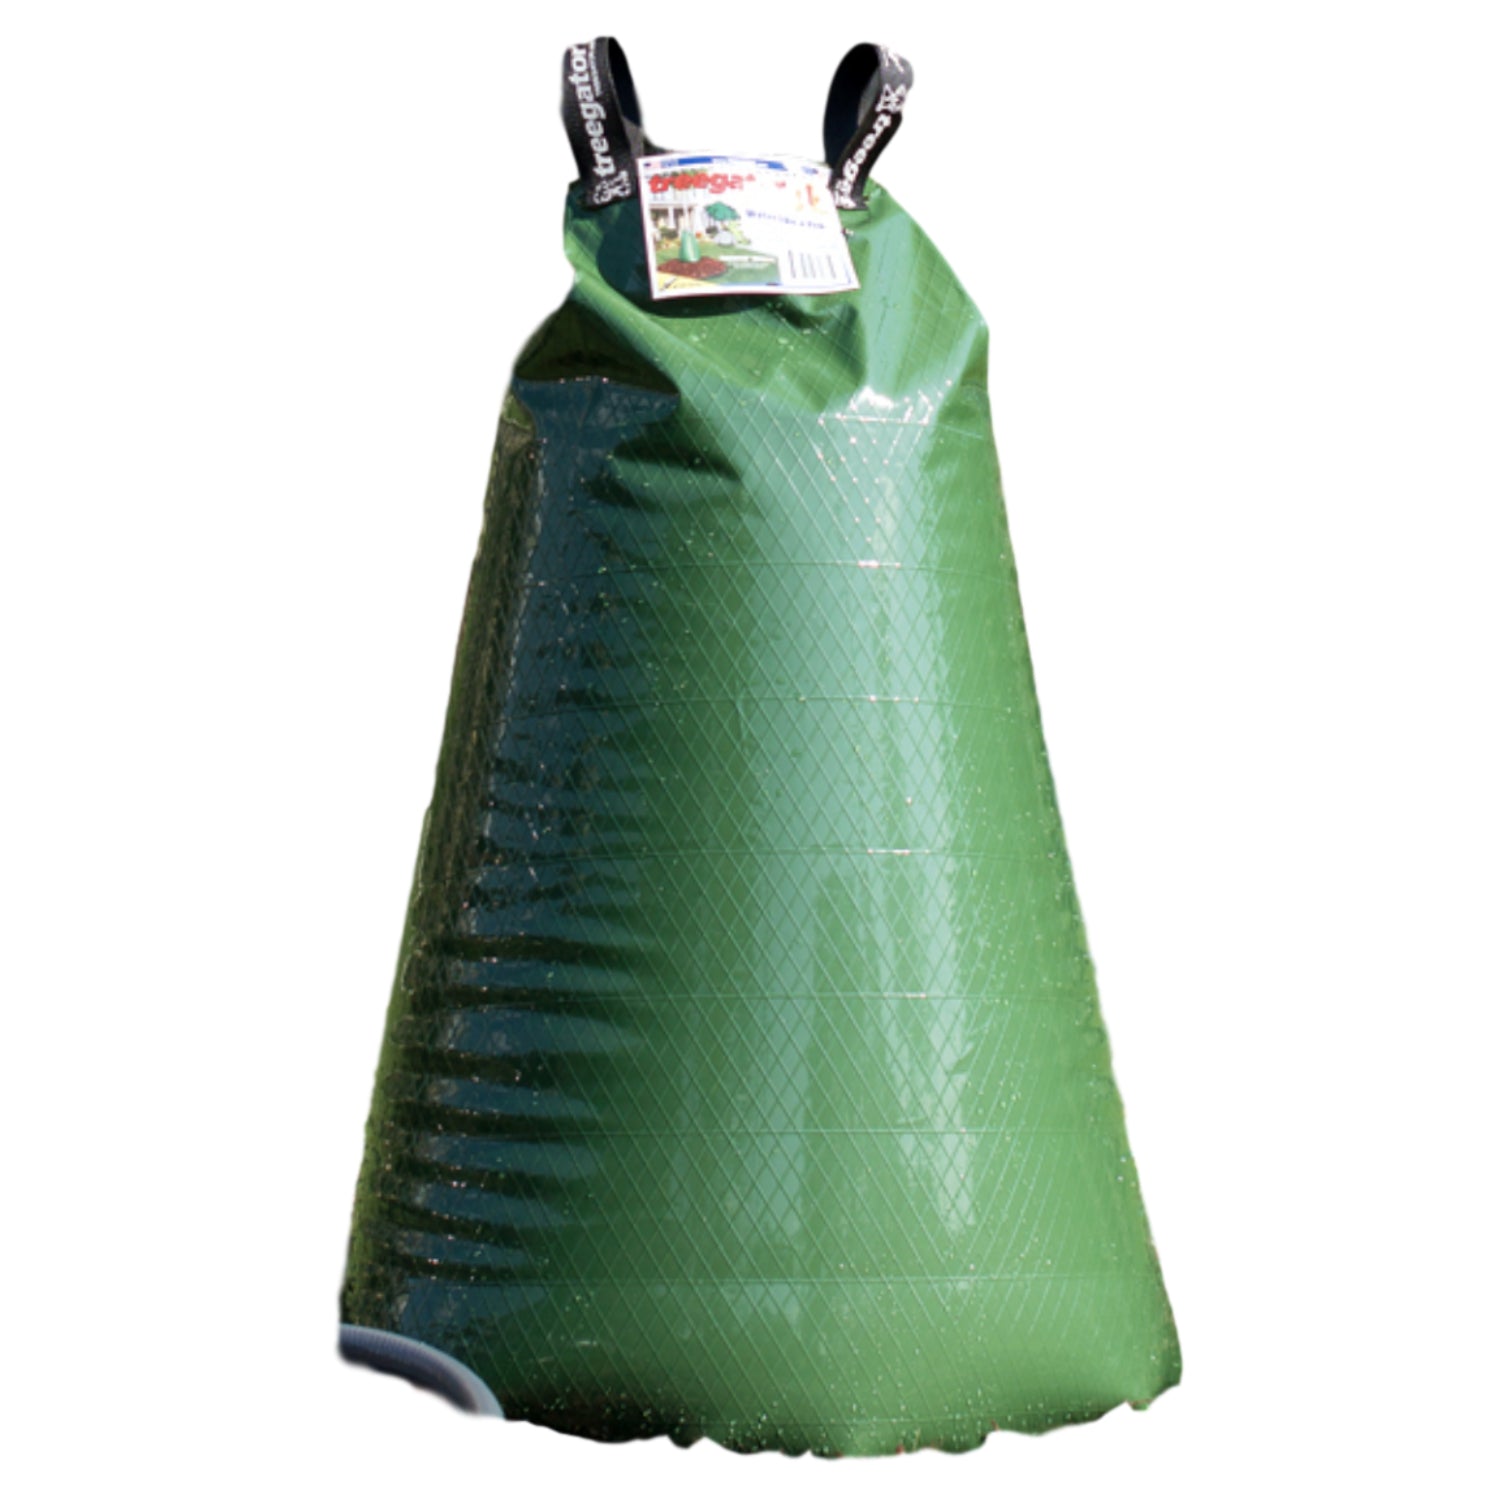 TreeGator® Original - 98183 - 20 Gallon Drip Tree Watering Bag